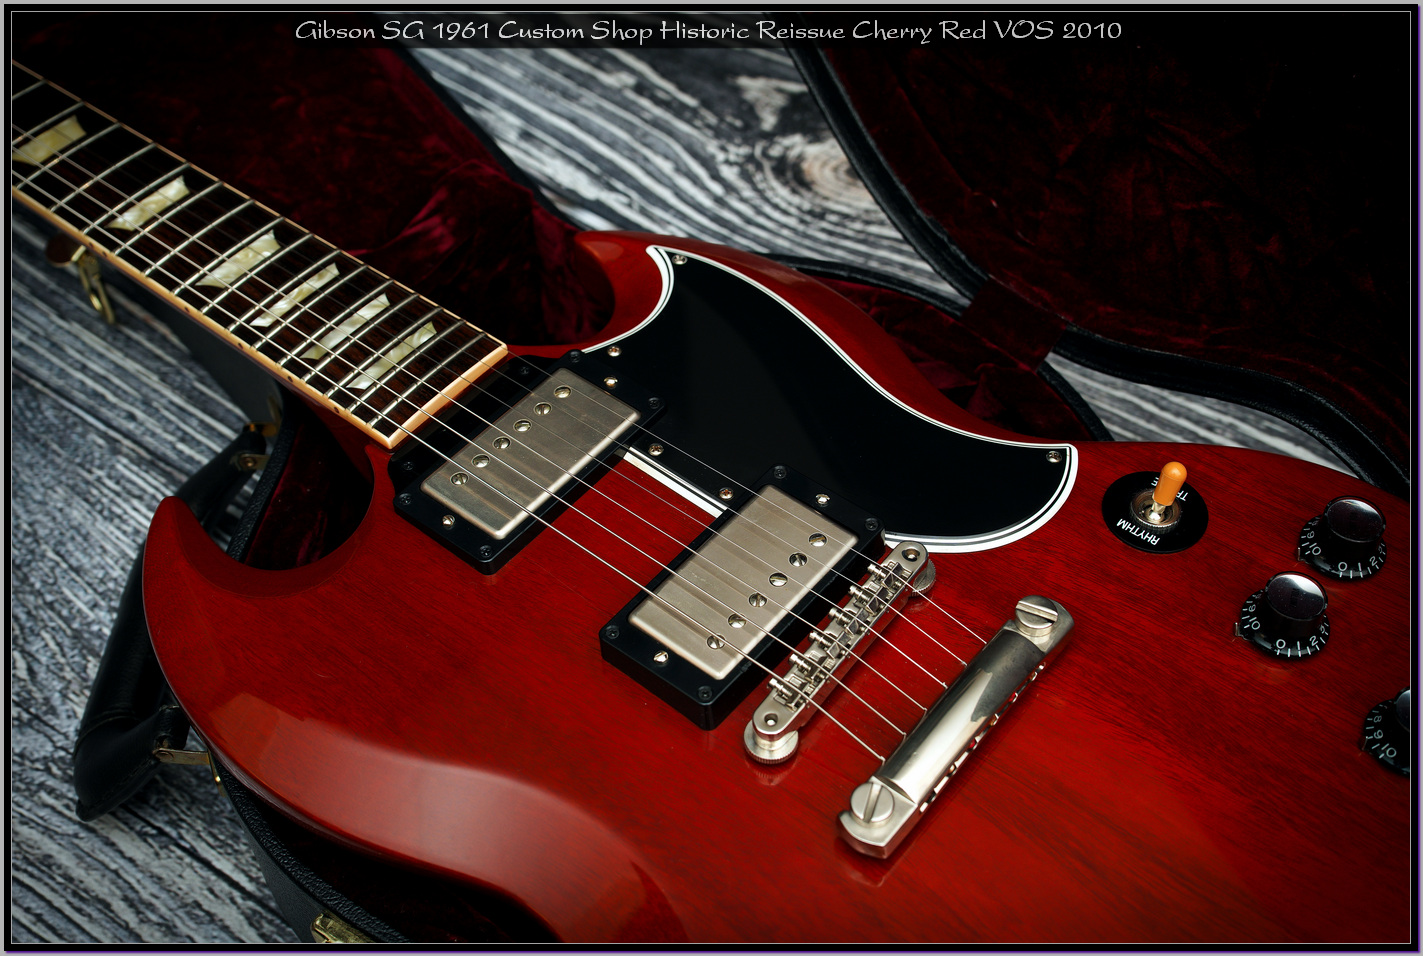 Gibson SG 1961 Custom Shop Historic Reissue Cherry Red VOS 2010 09_x1400.jpg